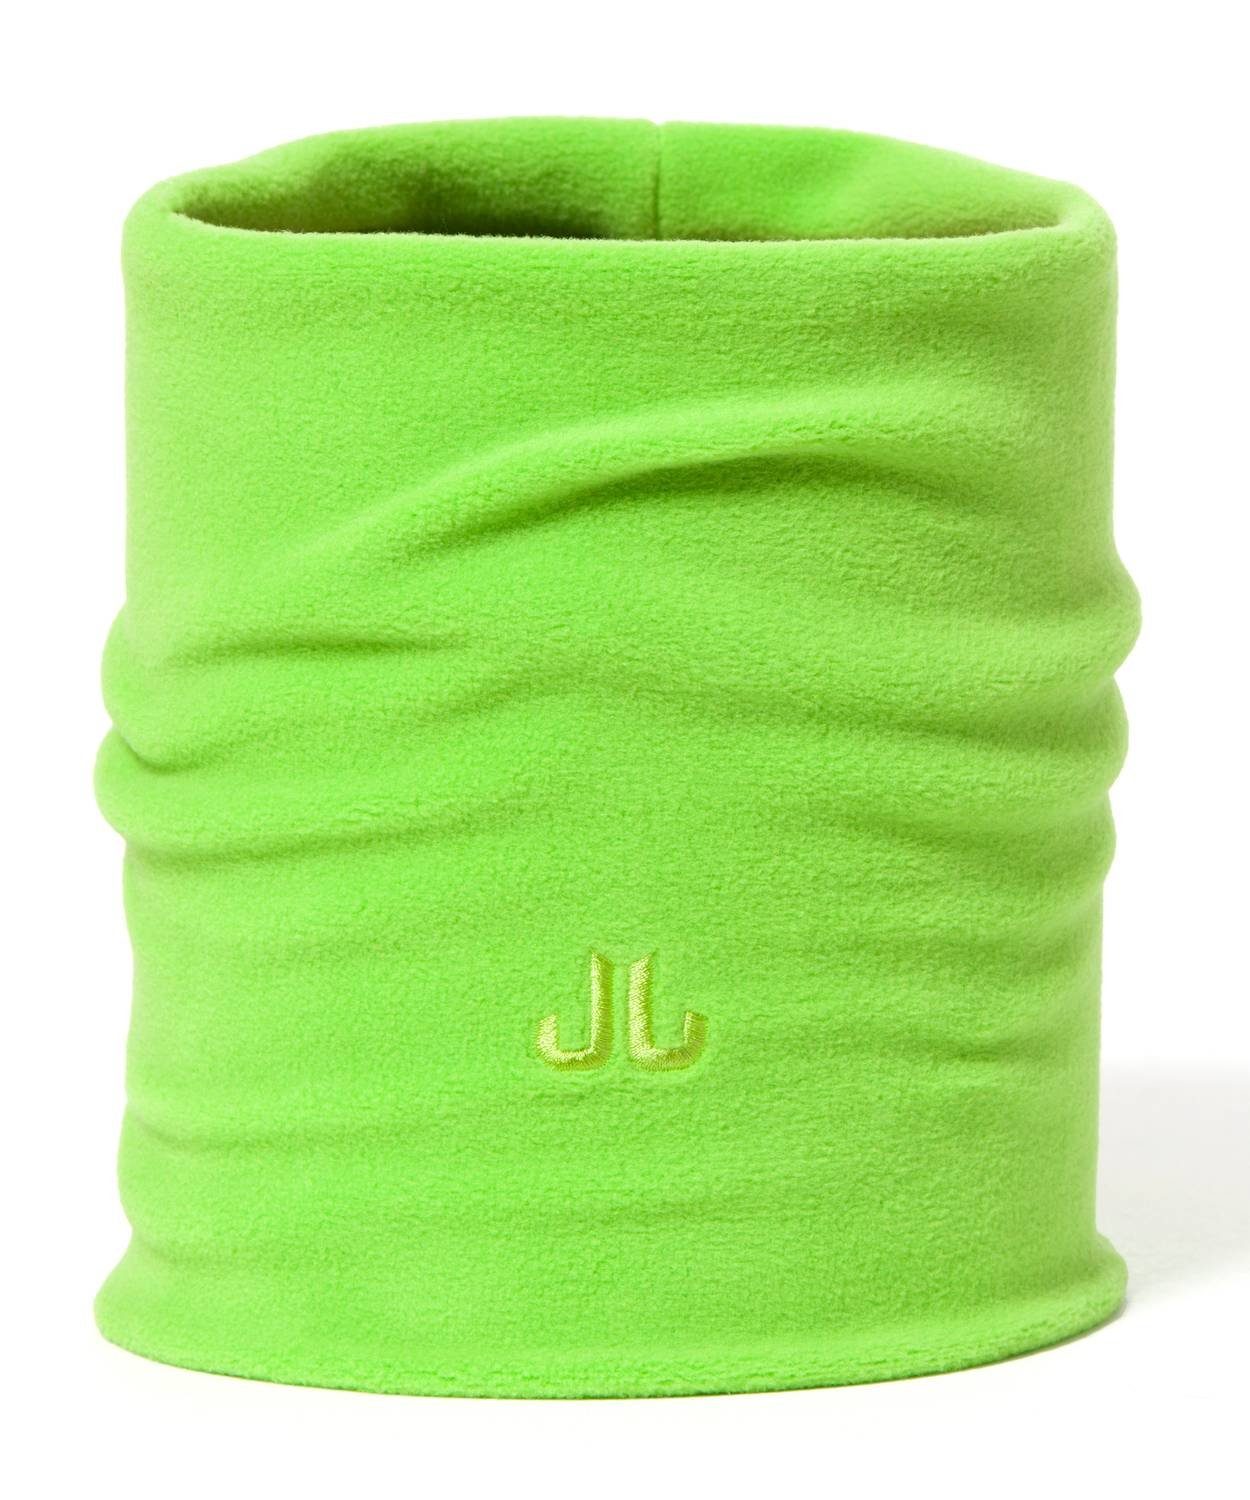 Jail Jam Fleeceschal Sportlicher Unisex Stretch Loop-Schal aus Microfleece, doppellagig